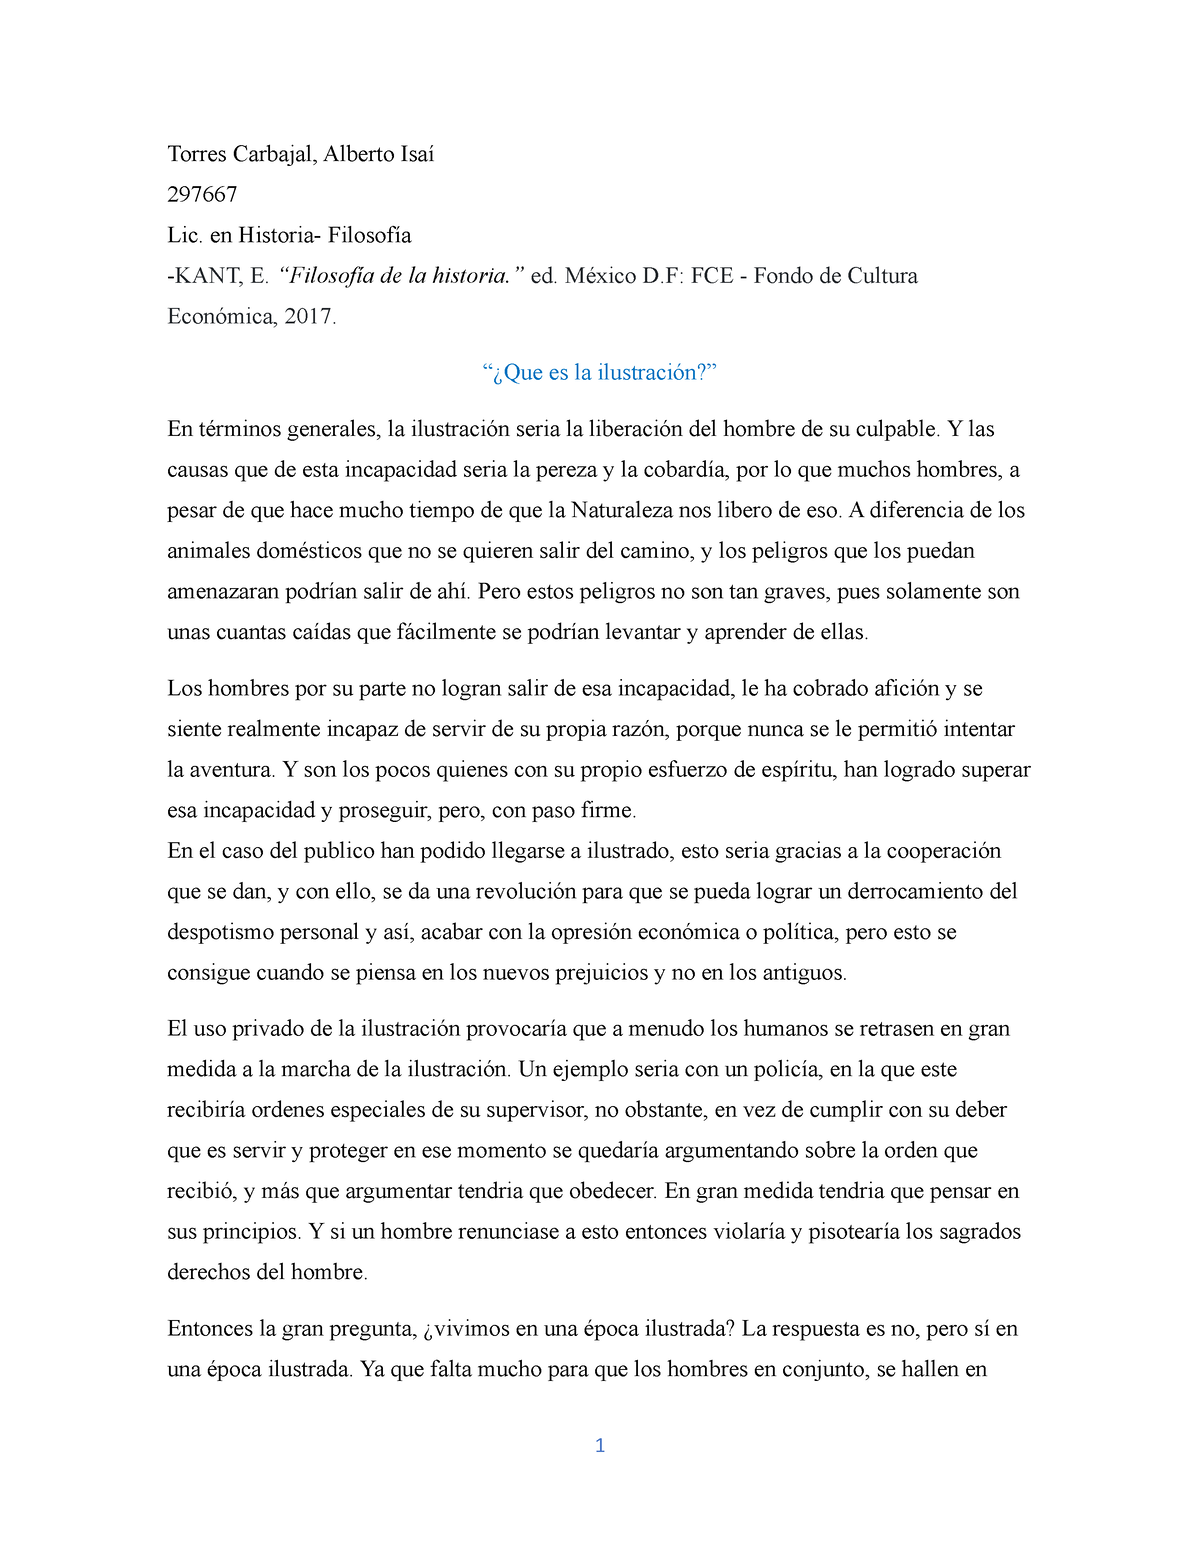 Historia DE LA Filosofia DE KANT - Torres Carbajal, Alberto Isaí 297667 ...